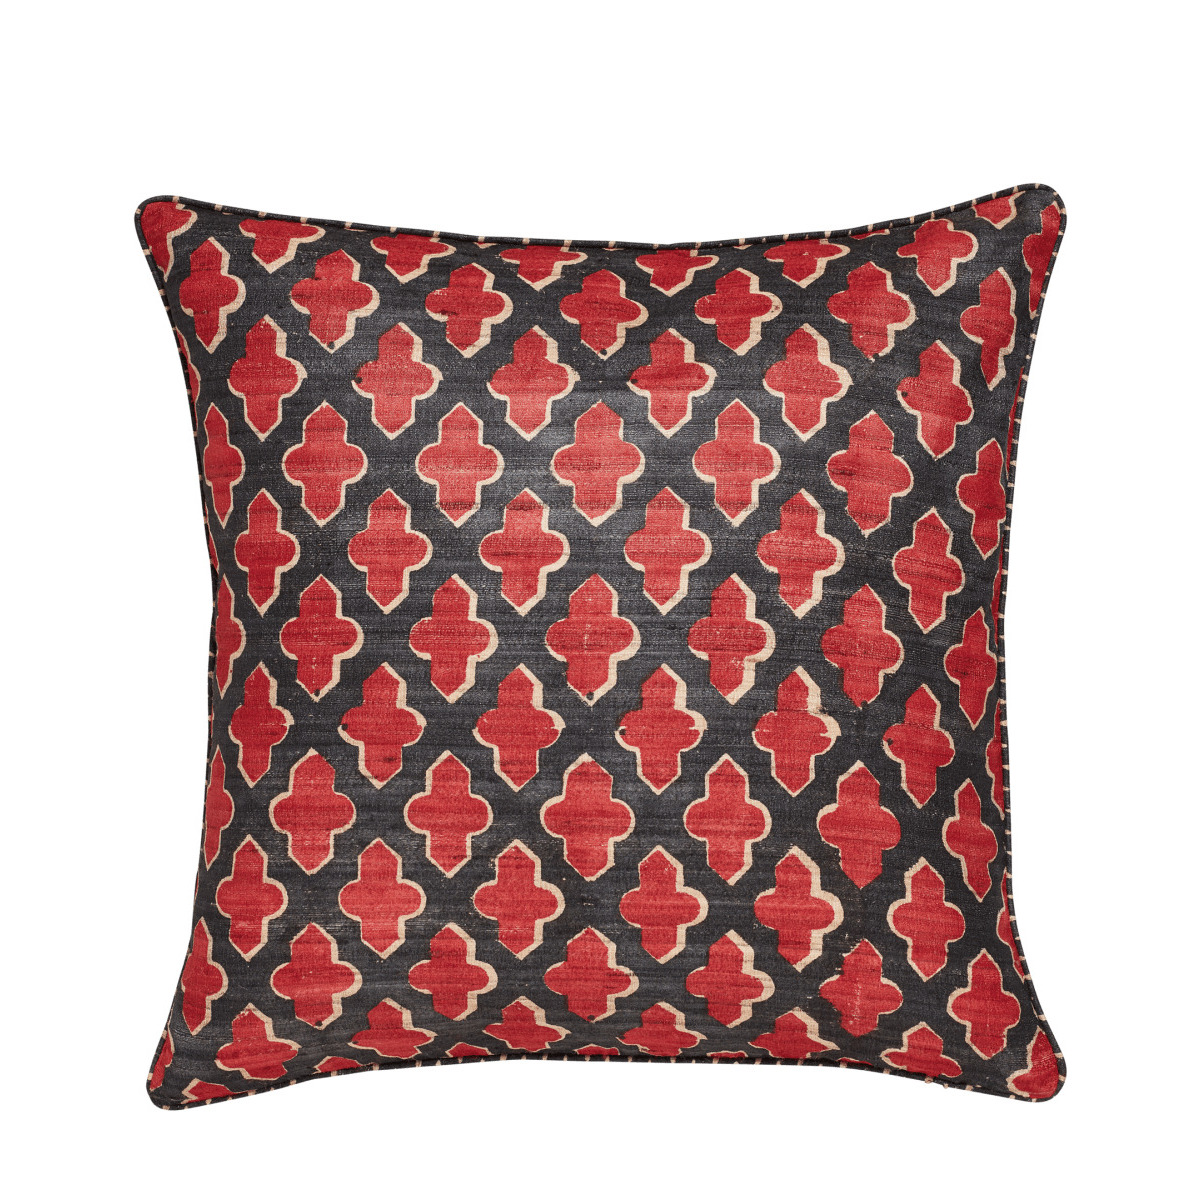 OKA, Serigraph Reversible Pillow Cover - Red/Black, Cushion Covers, Silk, Printed